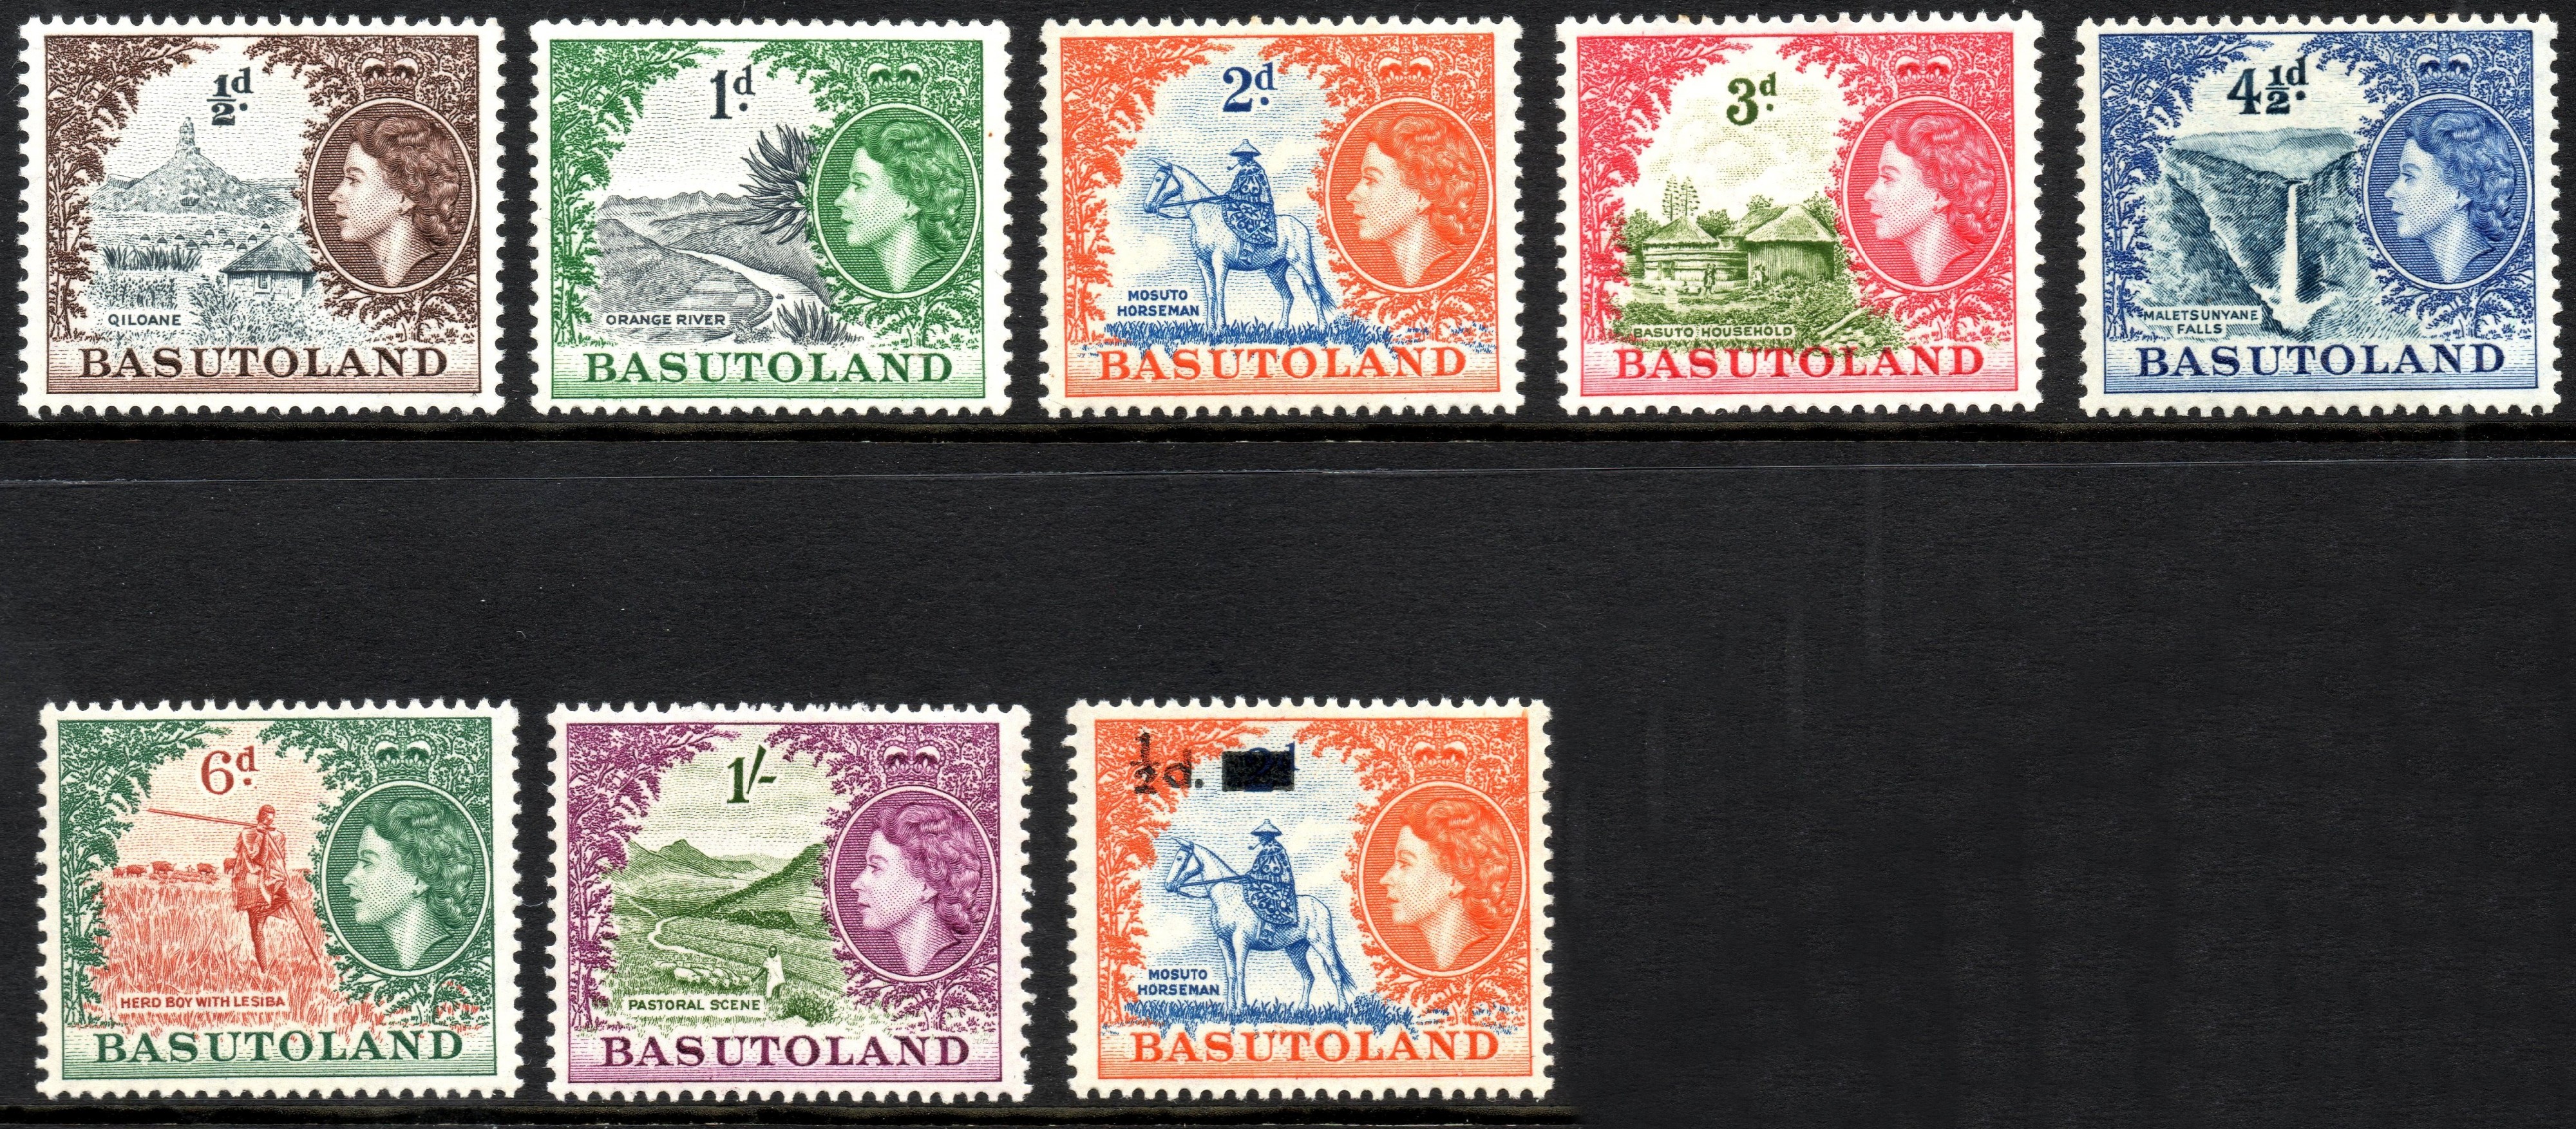 Basutoland 1954-59 stamps